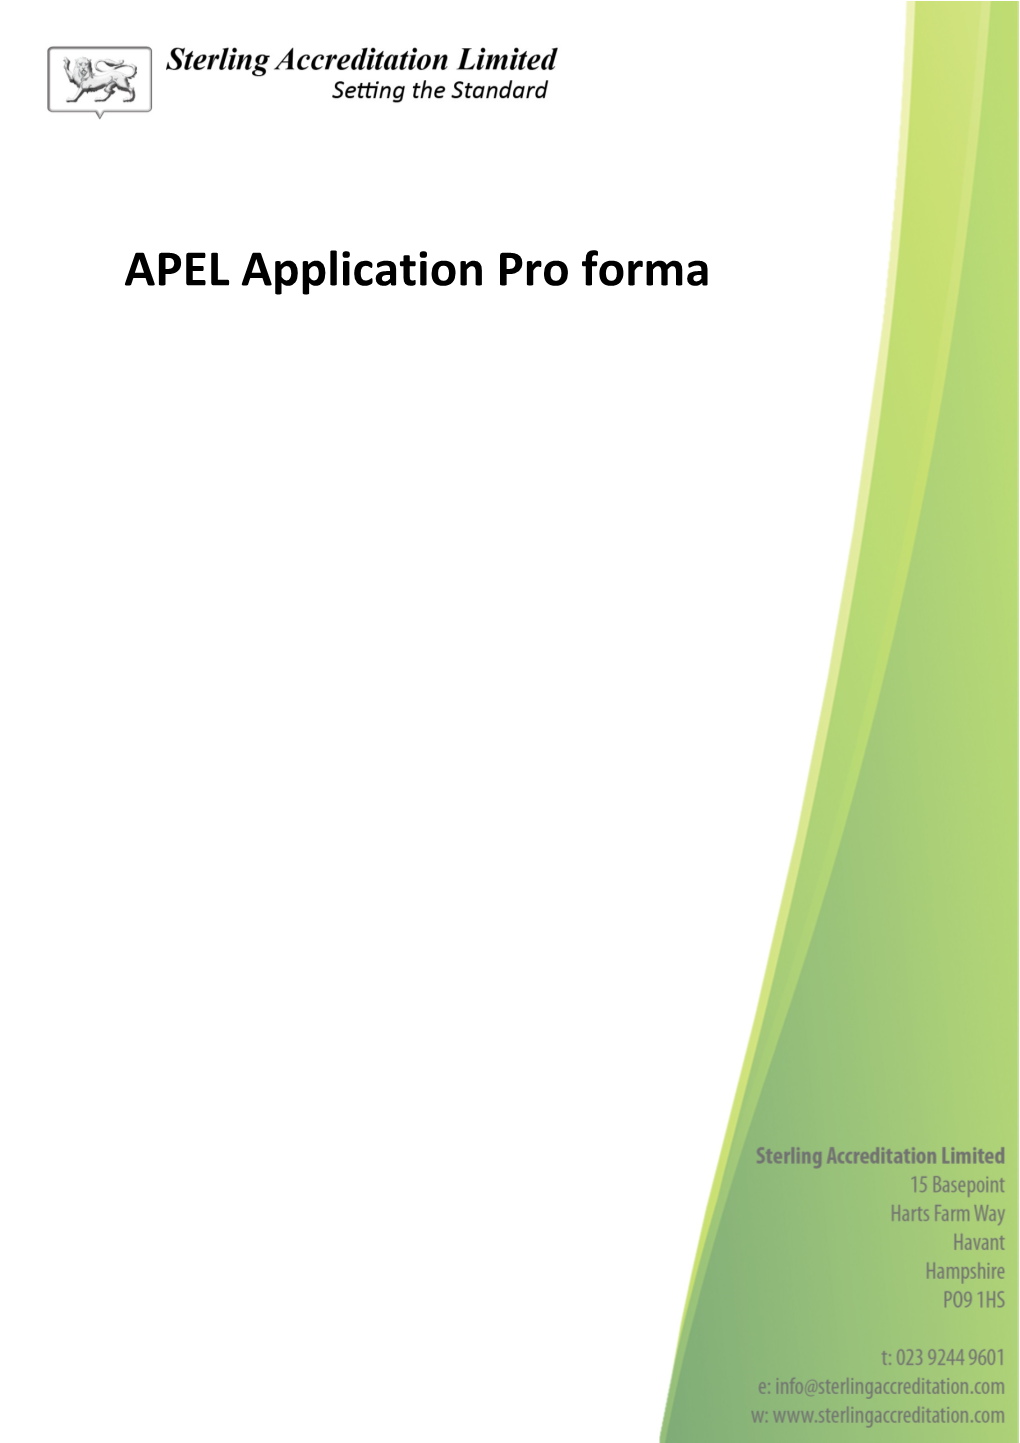 APEL Application Pro Forma